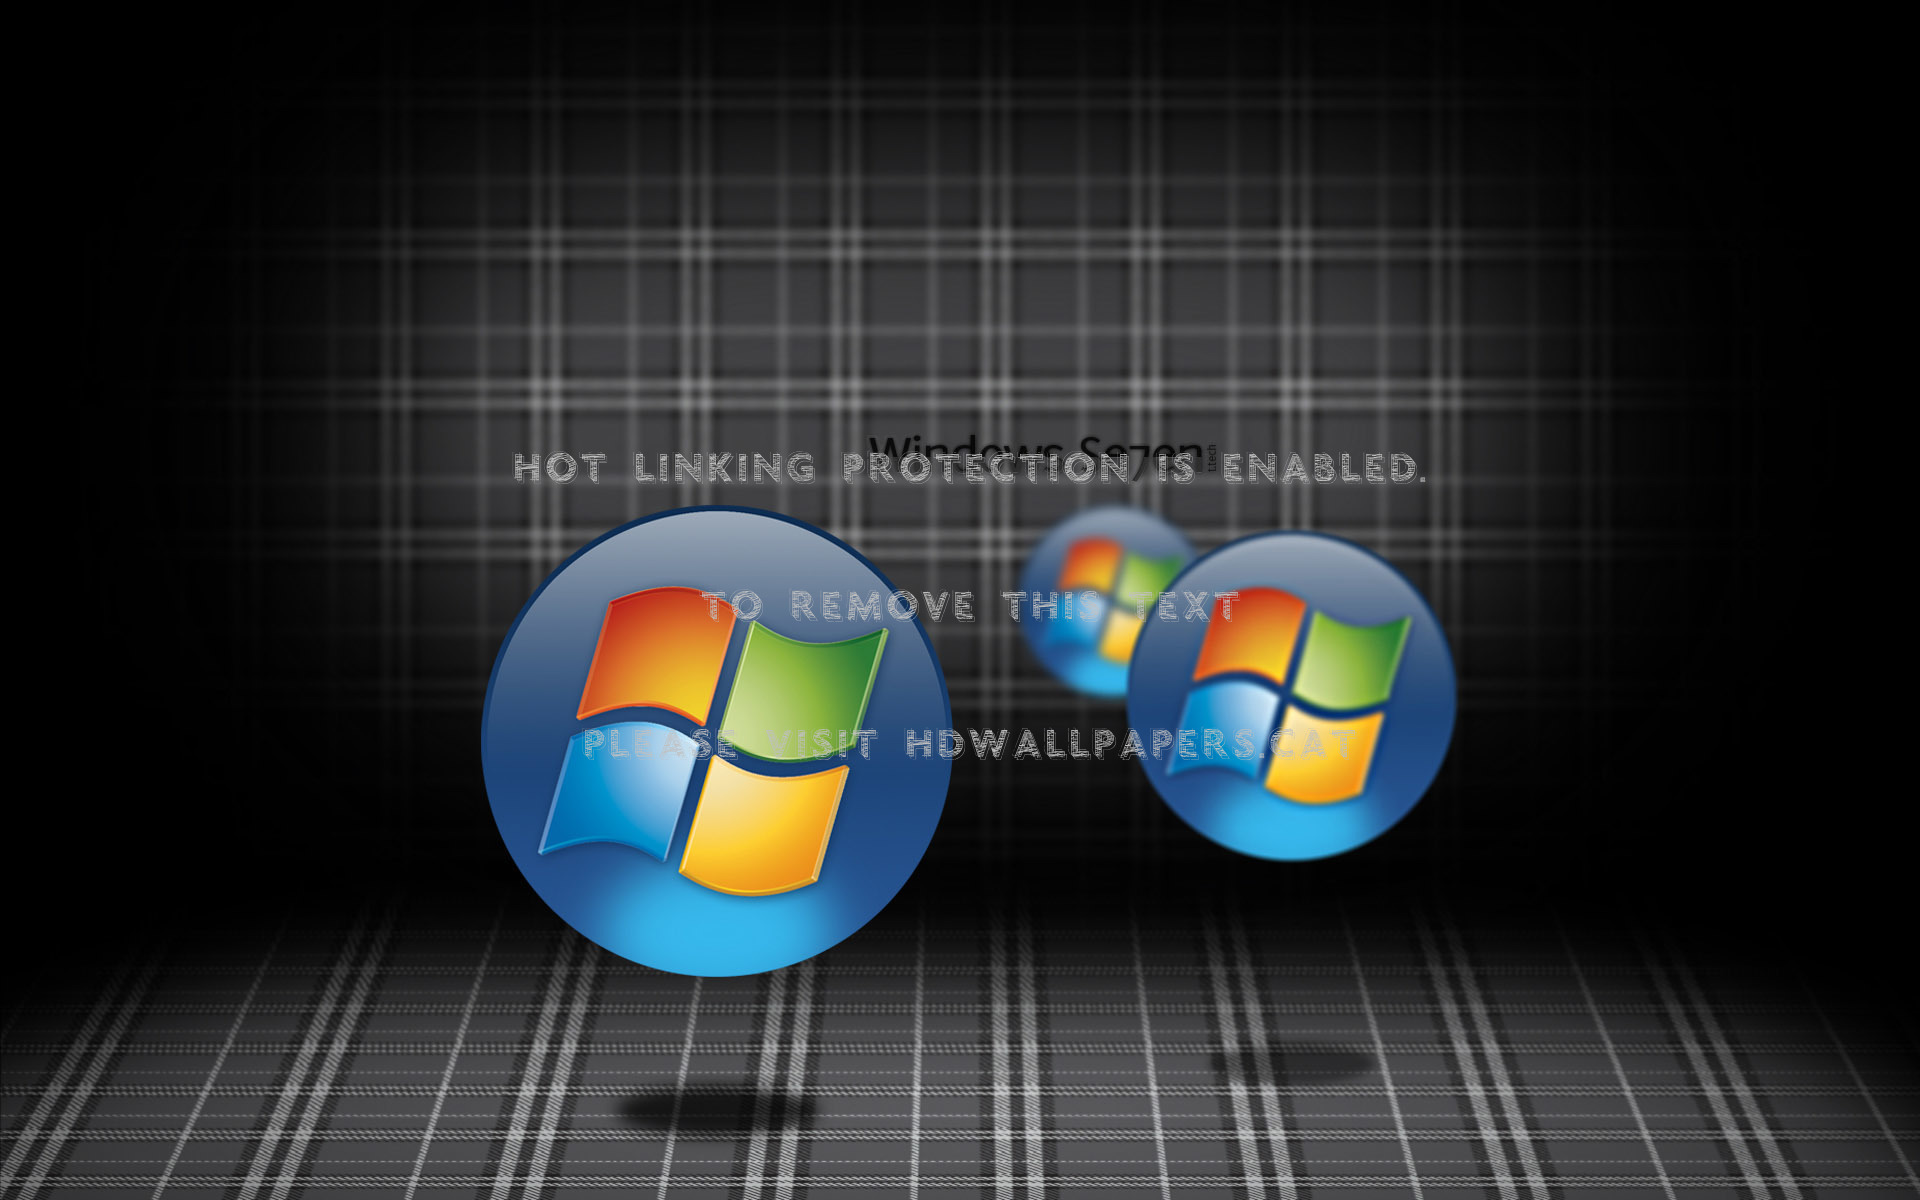 Wallpaper 53-windows 7 Black Steel Balls - Windows 7 Wallpaper Hd - HD Wallpaper 